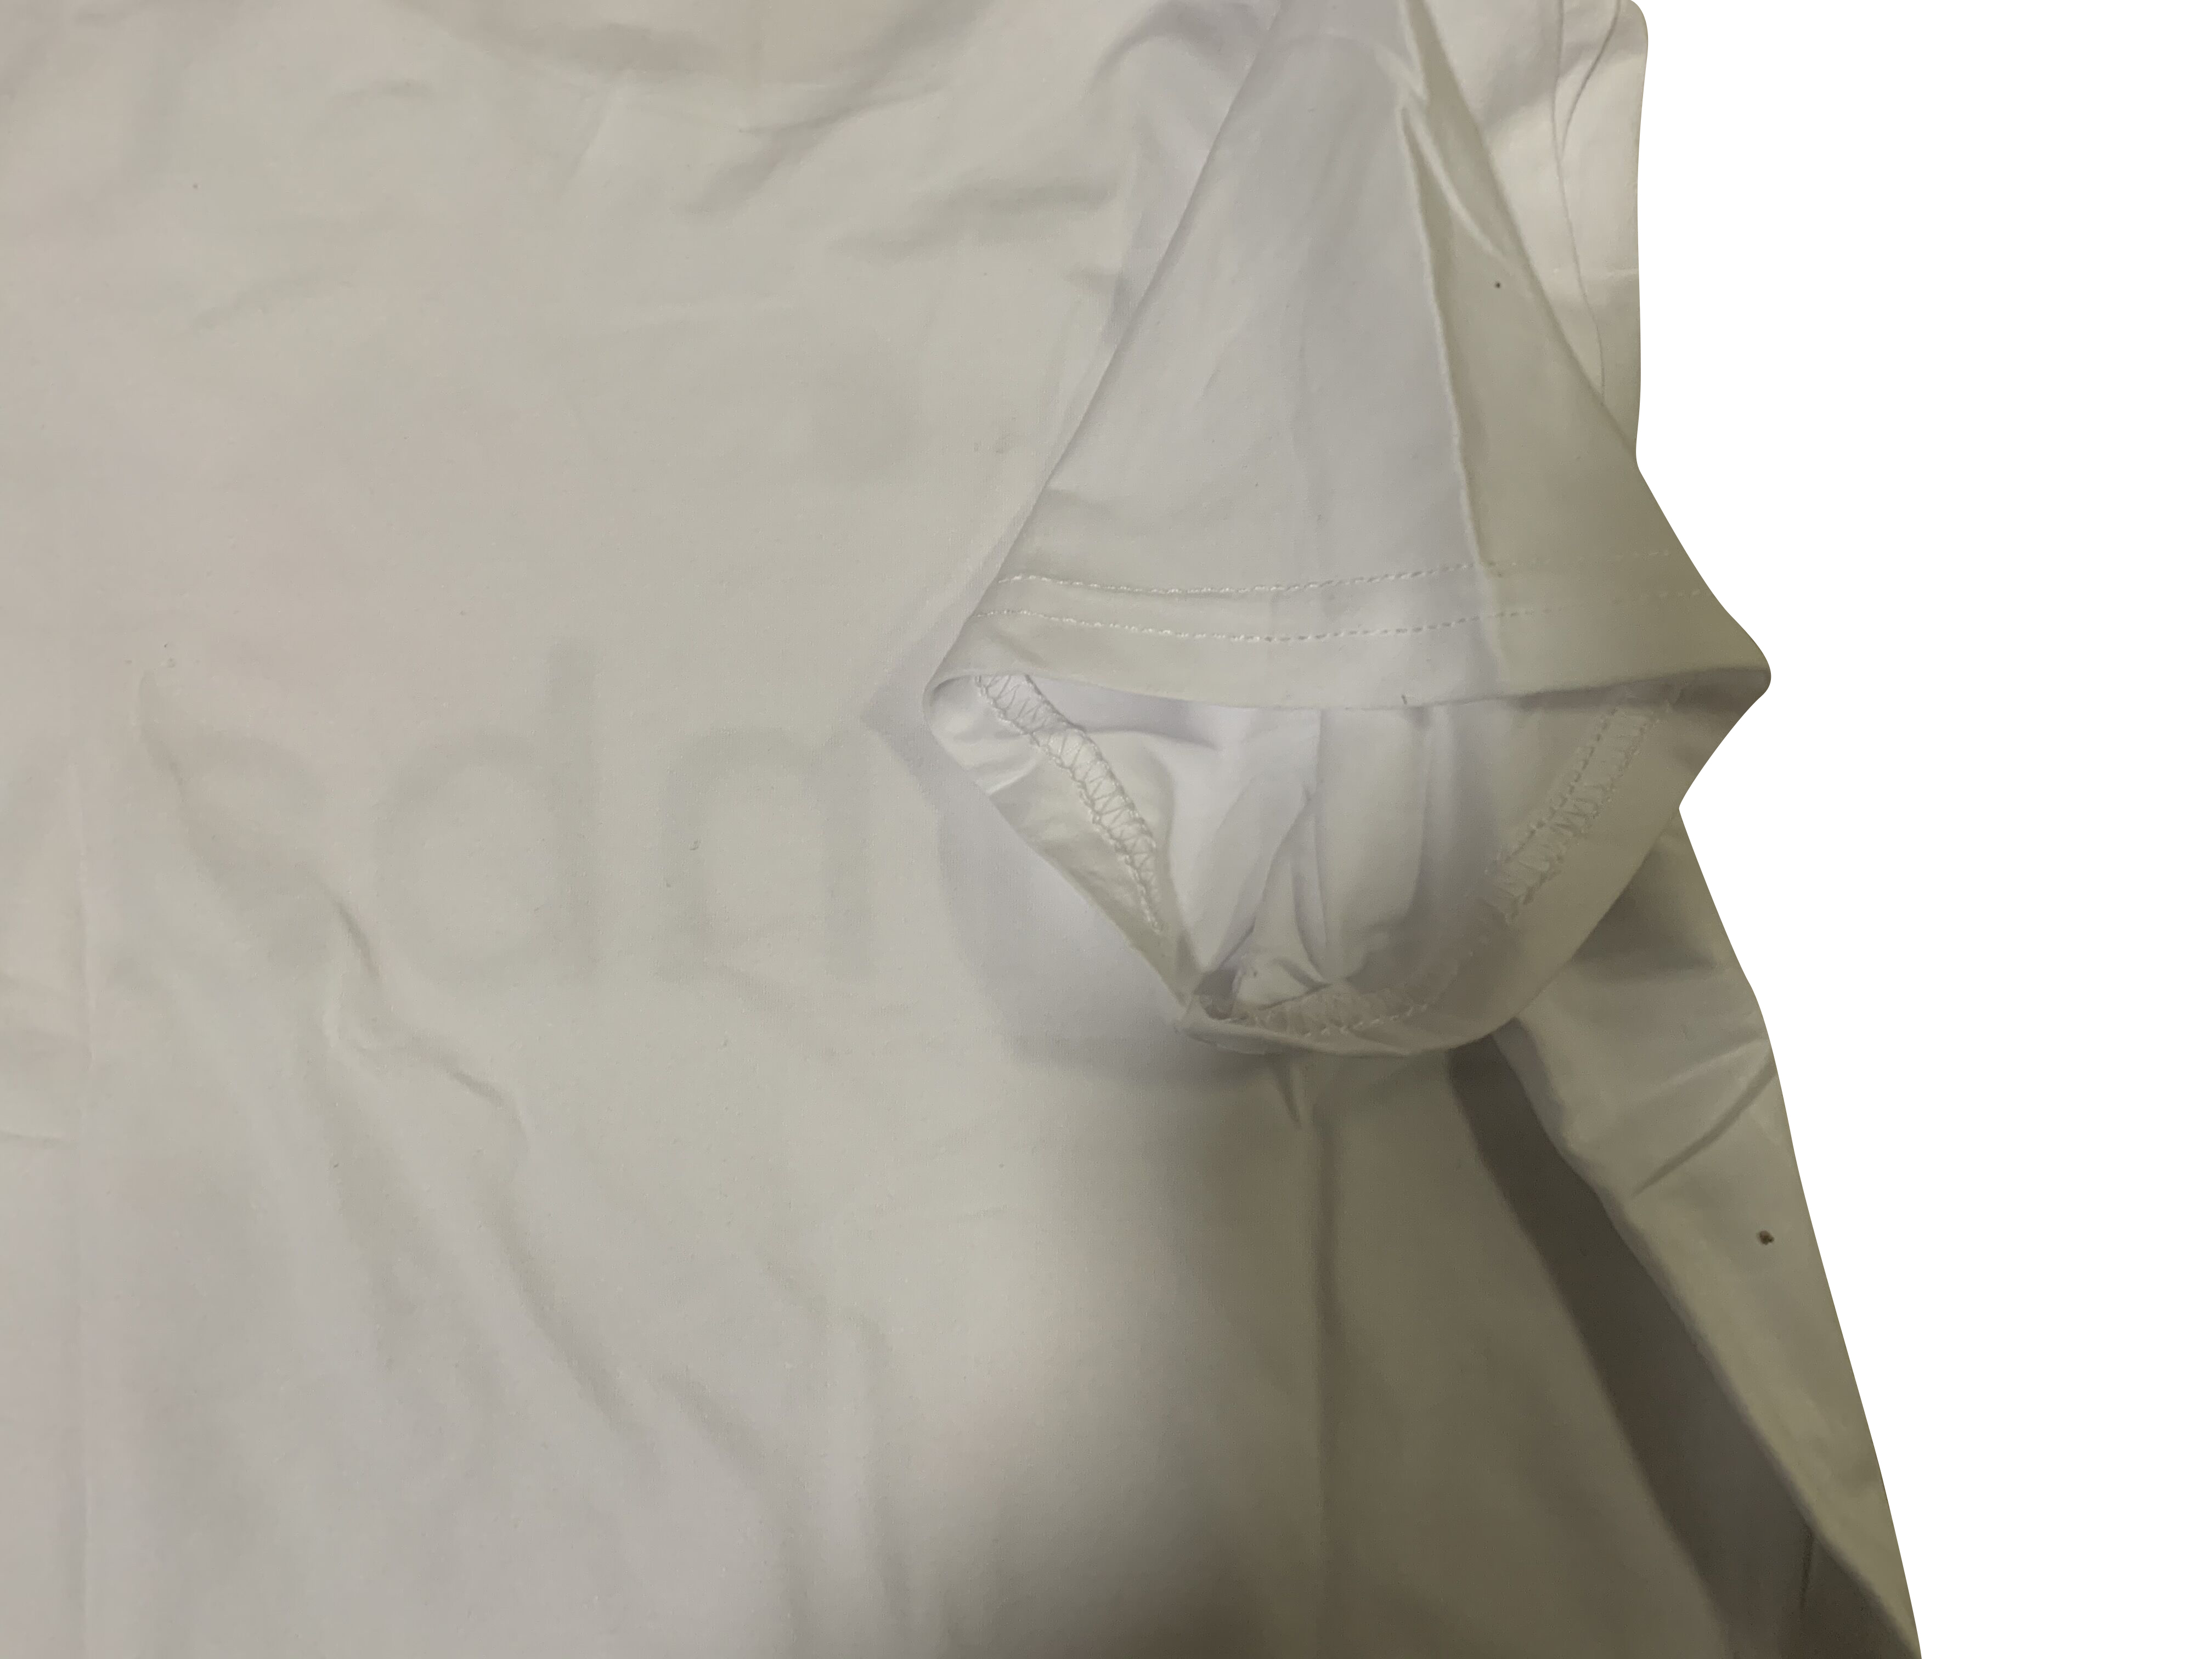 Ternbay Short Sleeve Cotton T Shirt for Men White Color